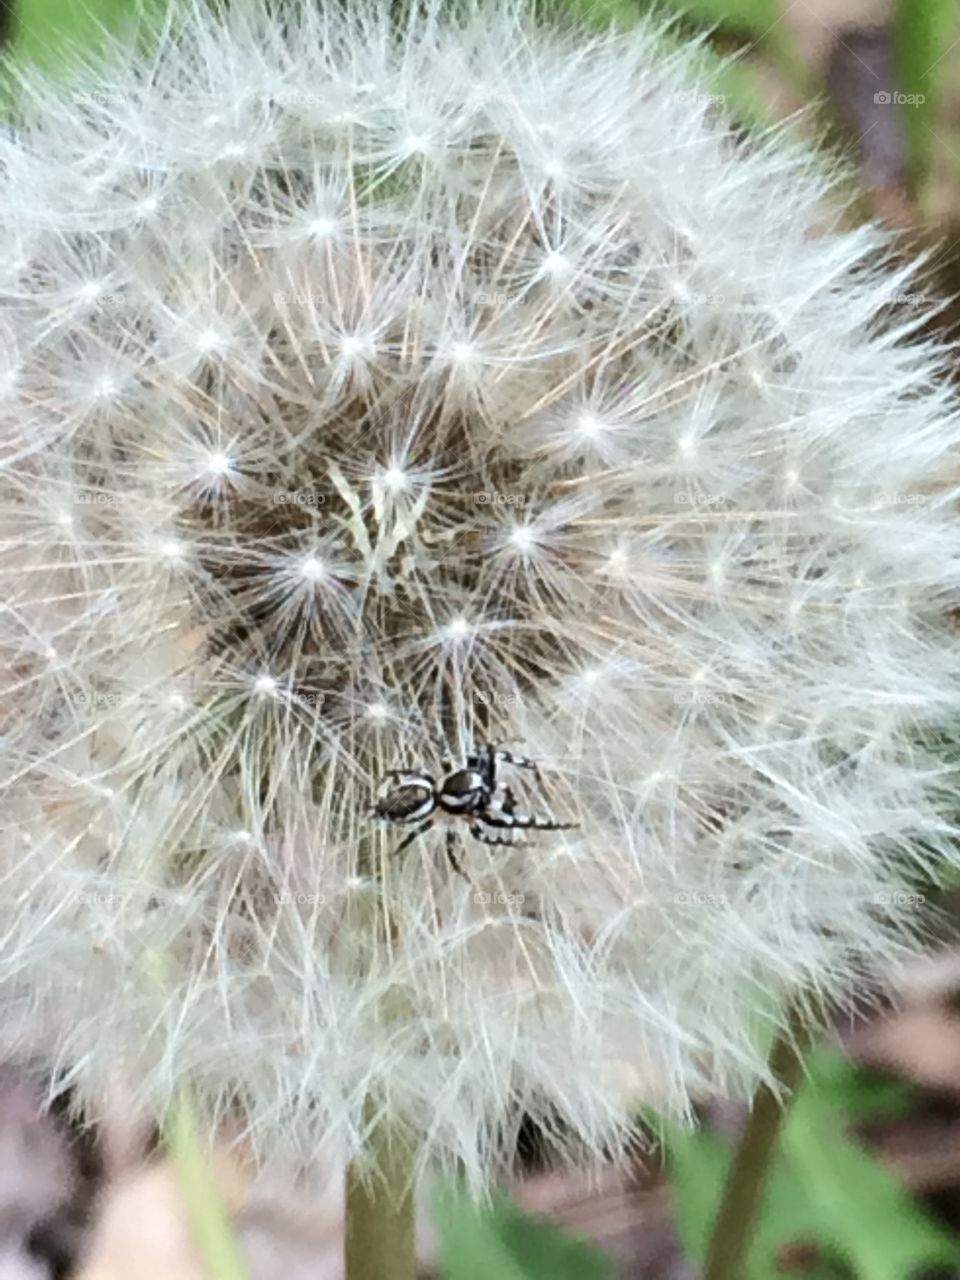 Mini spider